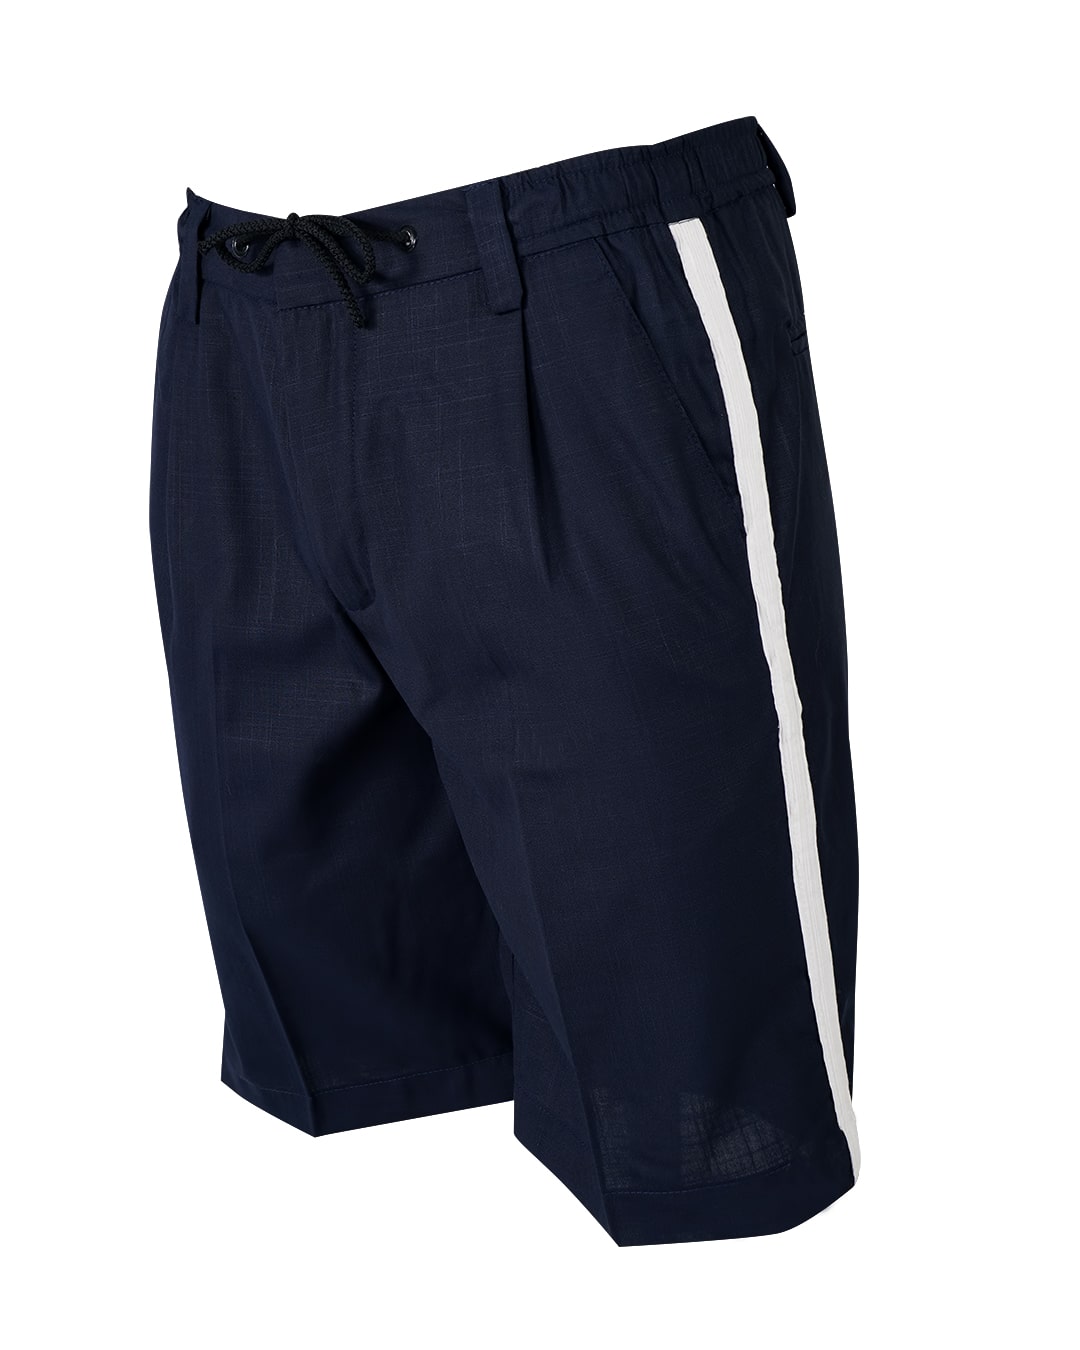 Navy Azul & White Guayabera Shorts - Shorts 30/XS ✓ 32/S ✓ 34/M ✓ 36/L ✓ 38/XL Fast shipping Worldwide Shipping